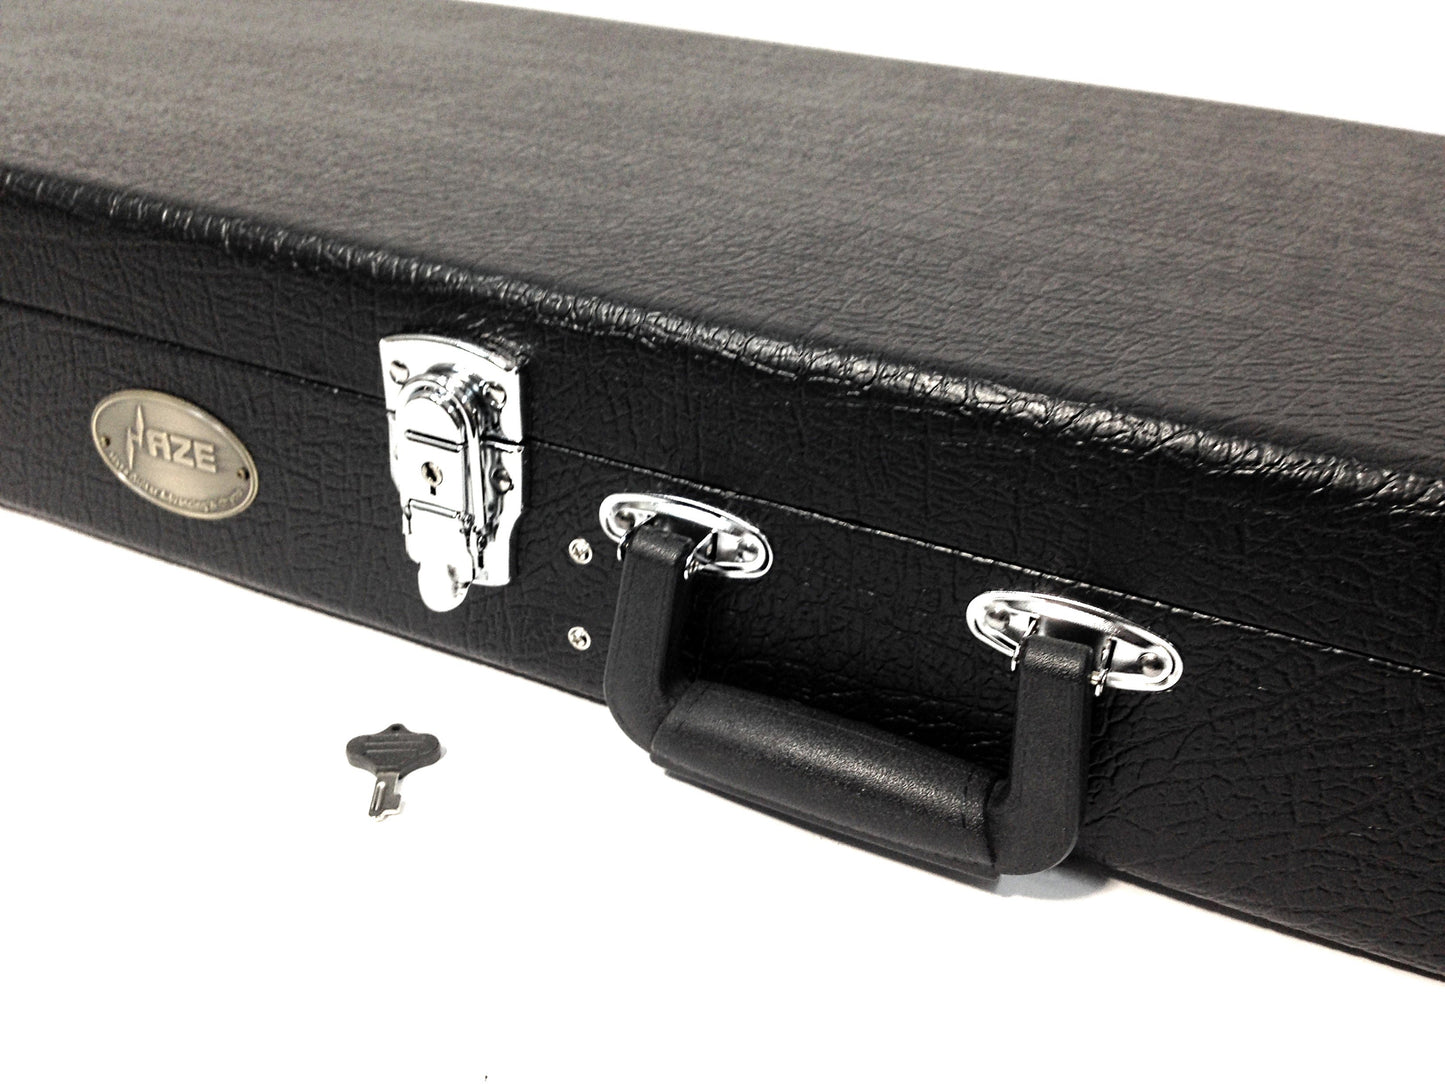 Haze HSBD1910C Rectangle Double Neck Electric Guitar Hard Case, Lockable, Black